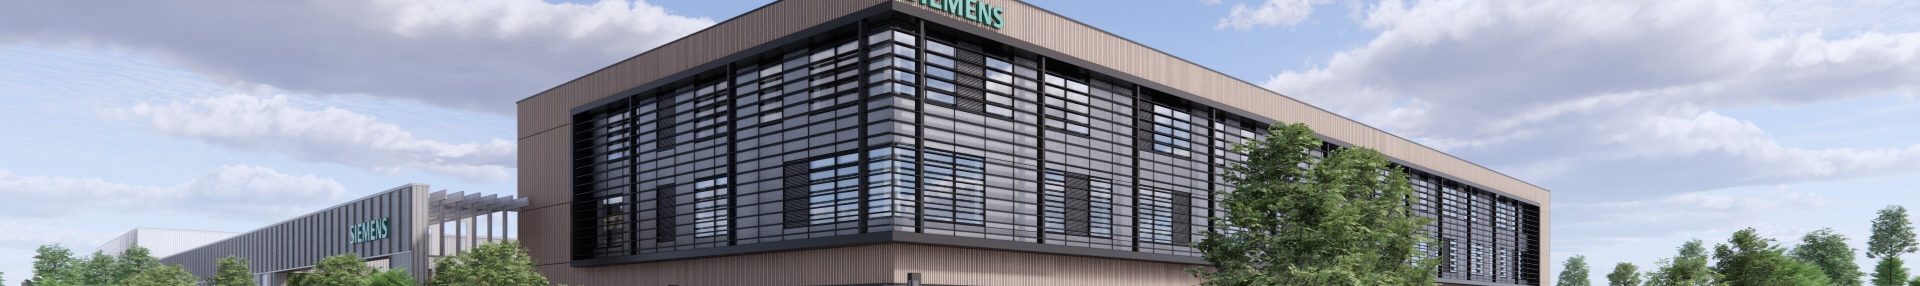 Siemens Factory Chippenham